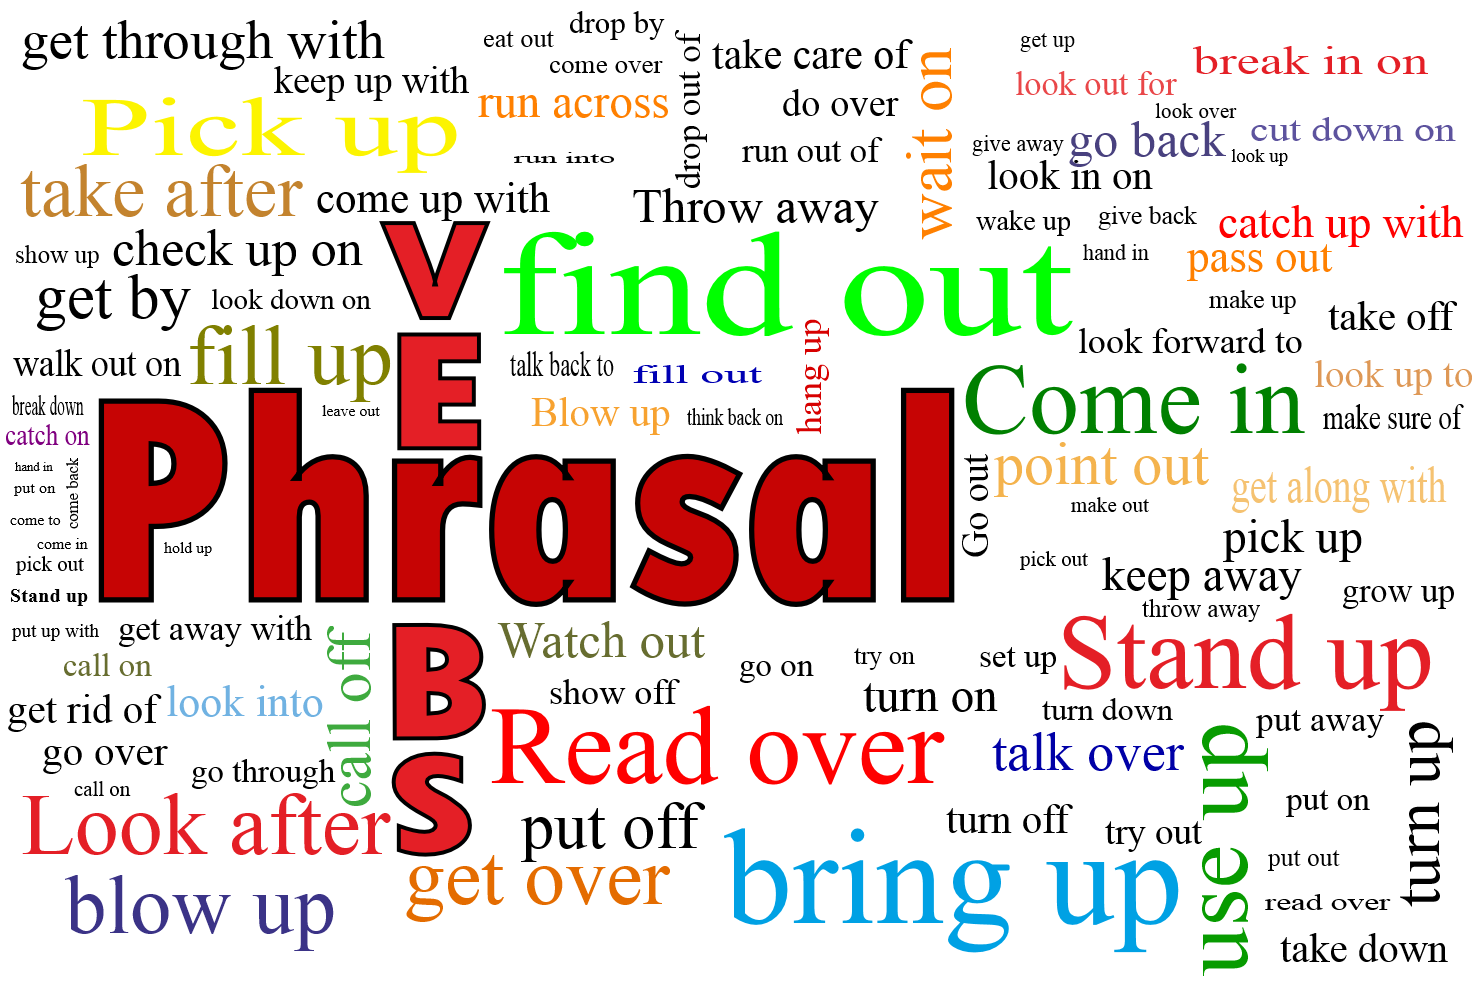 Phrasal Verbs, Inglês